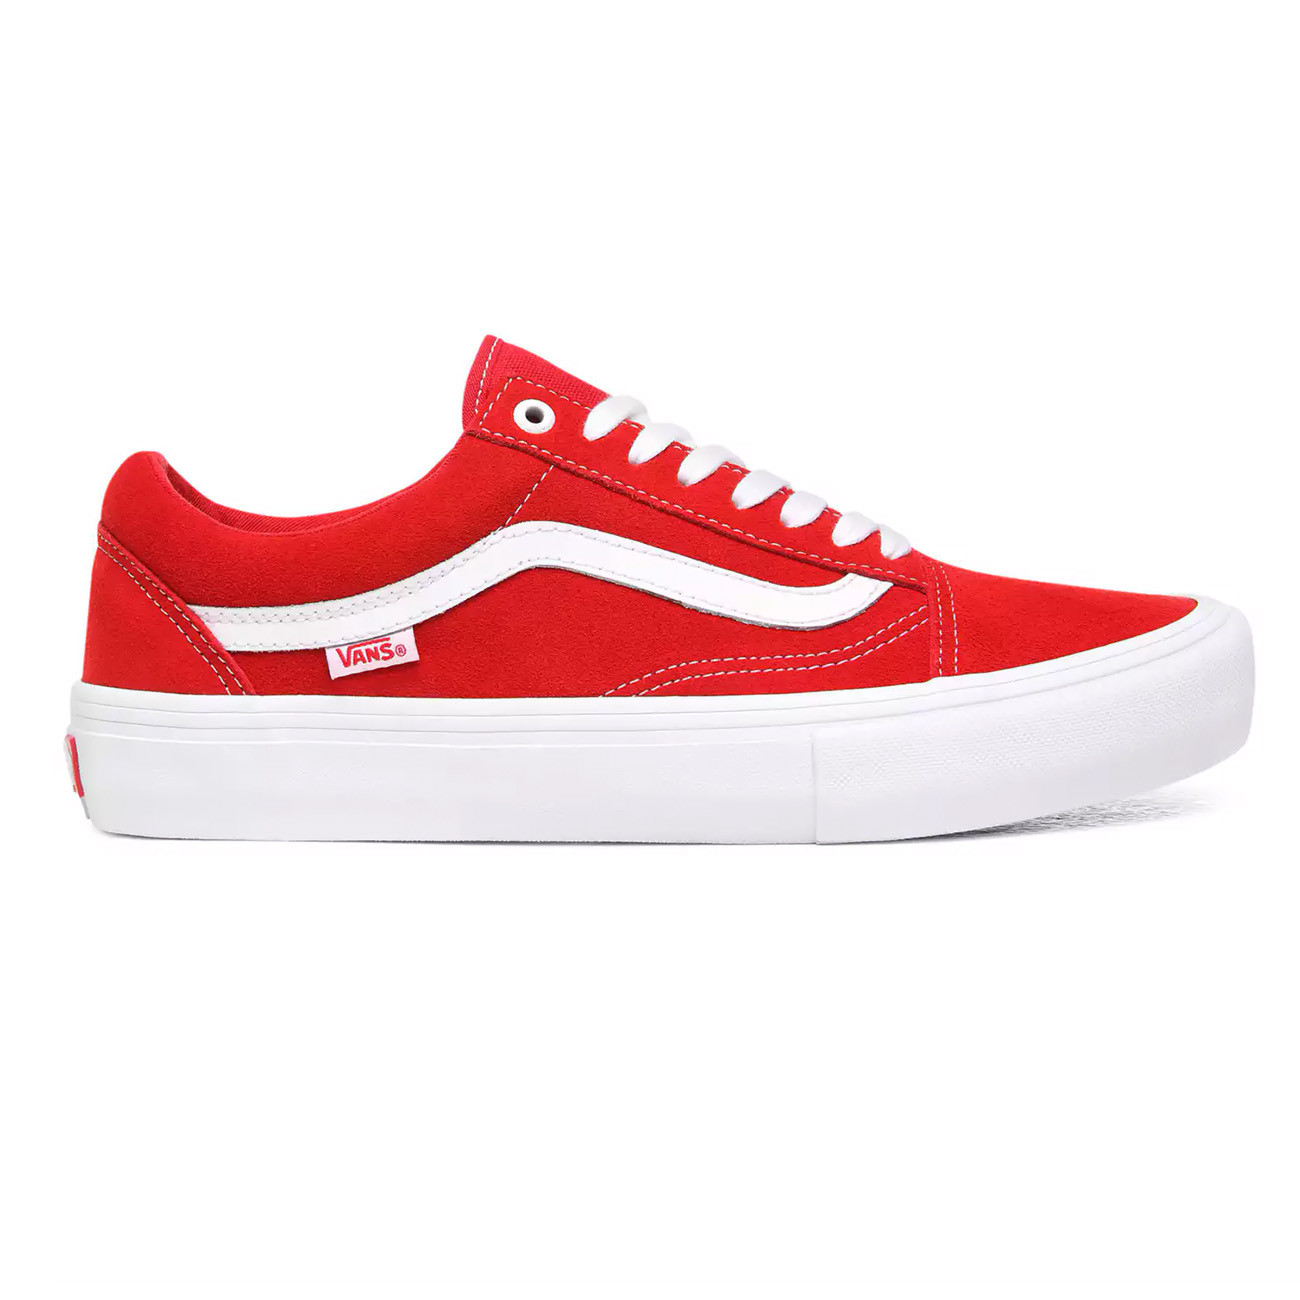 Skate shoes Vans Old Skool Pro suede red/white | Snowboard Zezula